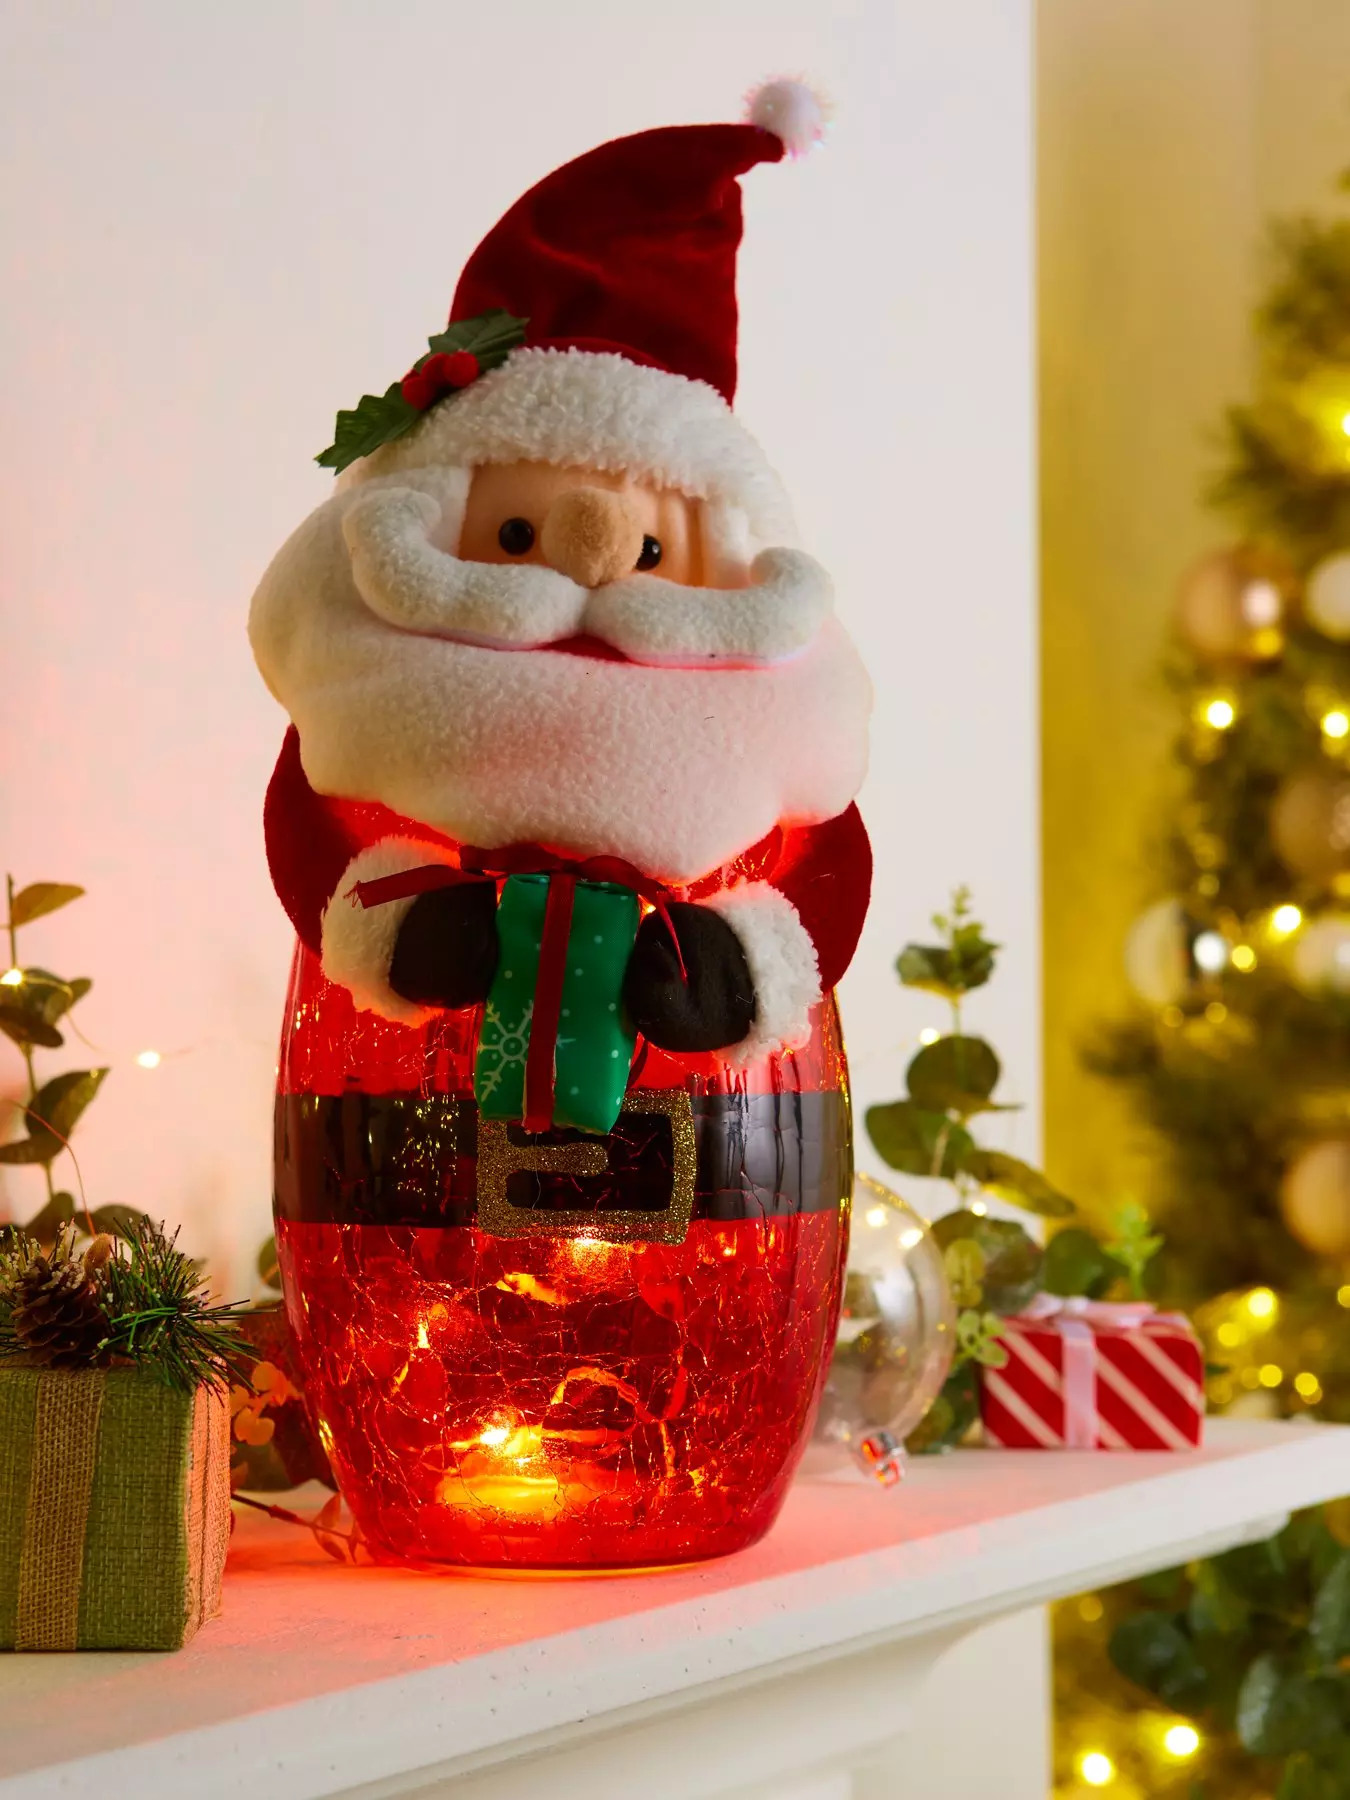 https://media.very.ie/i/littlewoodsireland/VIM09_SQ1_0000000017_RED_SLf/festive-battery-operated-lit-glass-santa-christmas-decoration.jpg?$180x240_retinamobilex2$&$roundel_lwireland$&p1_img=vsp_pink&fmt=webp